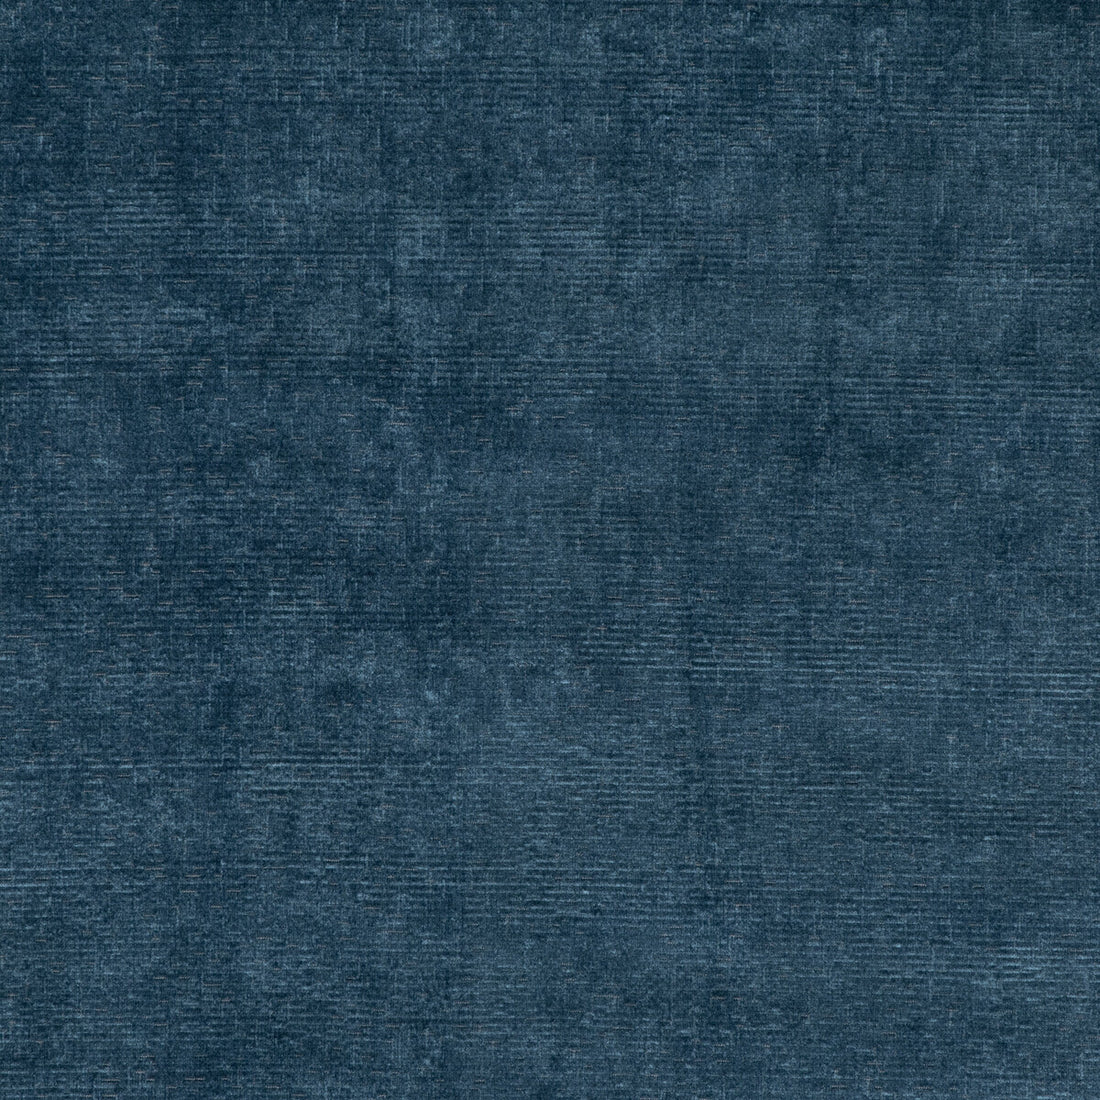 Alma Velvet fabric in blue color - pattern BF10827.660.0 - by G P &amp; J Baker in the Coromandel Velvets collection